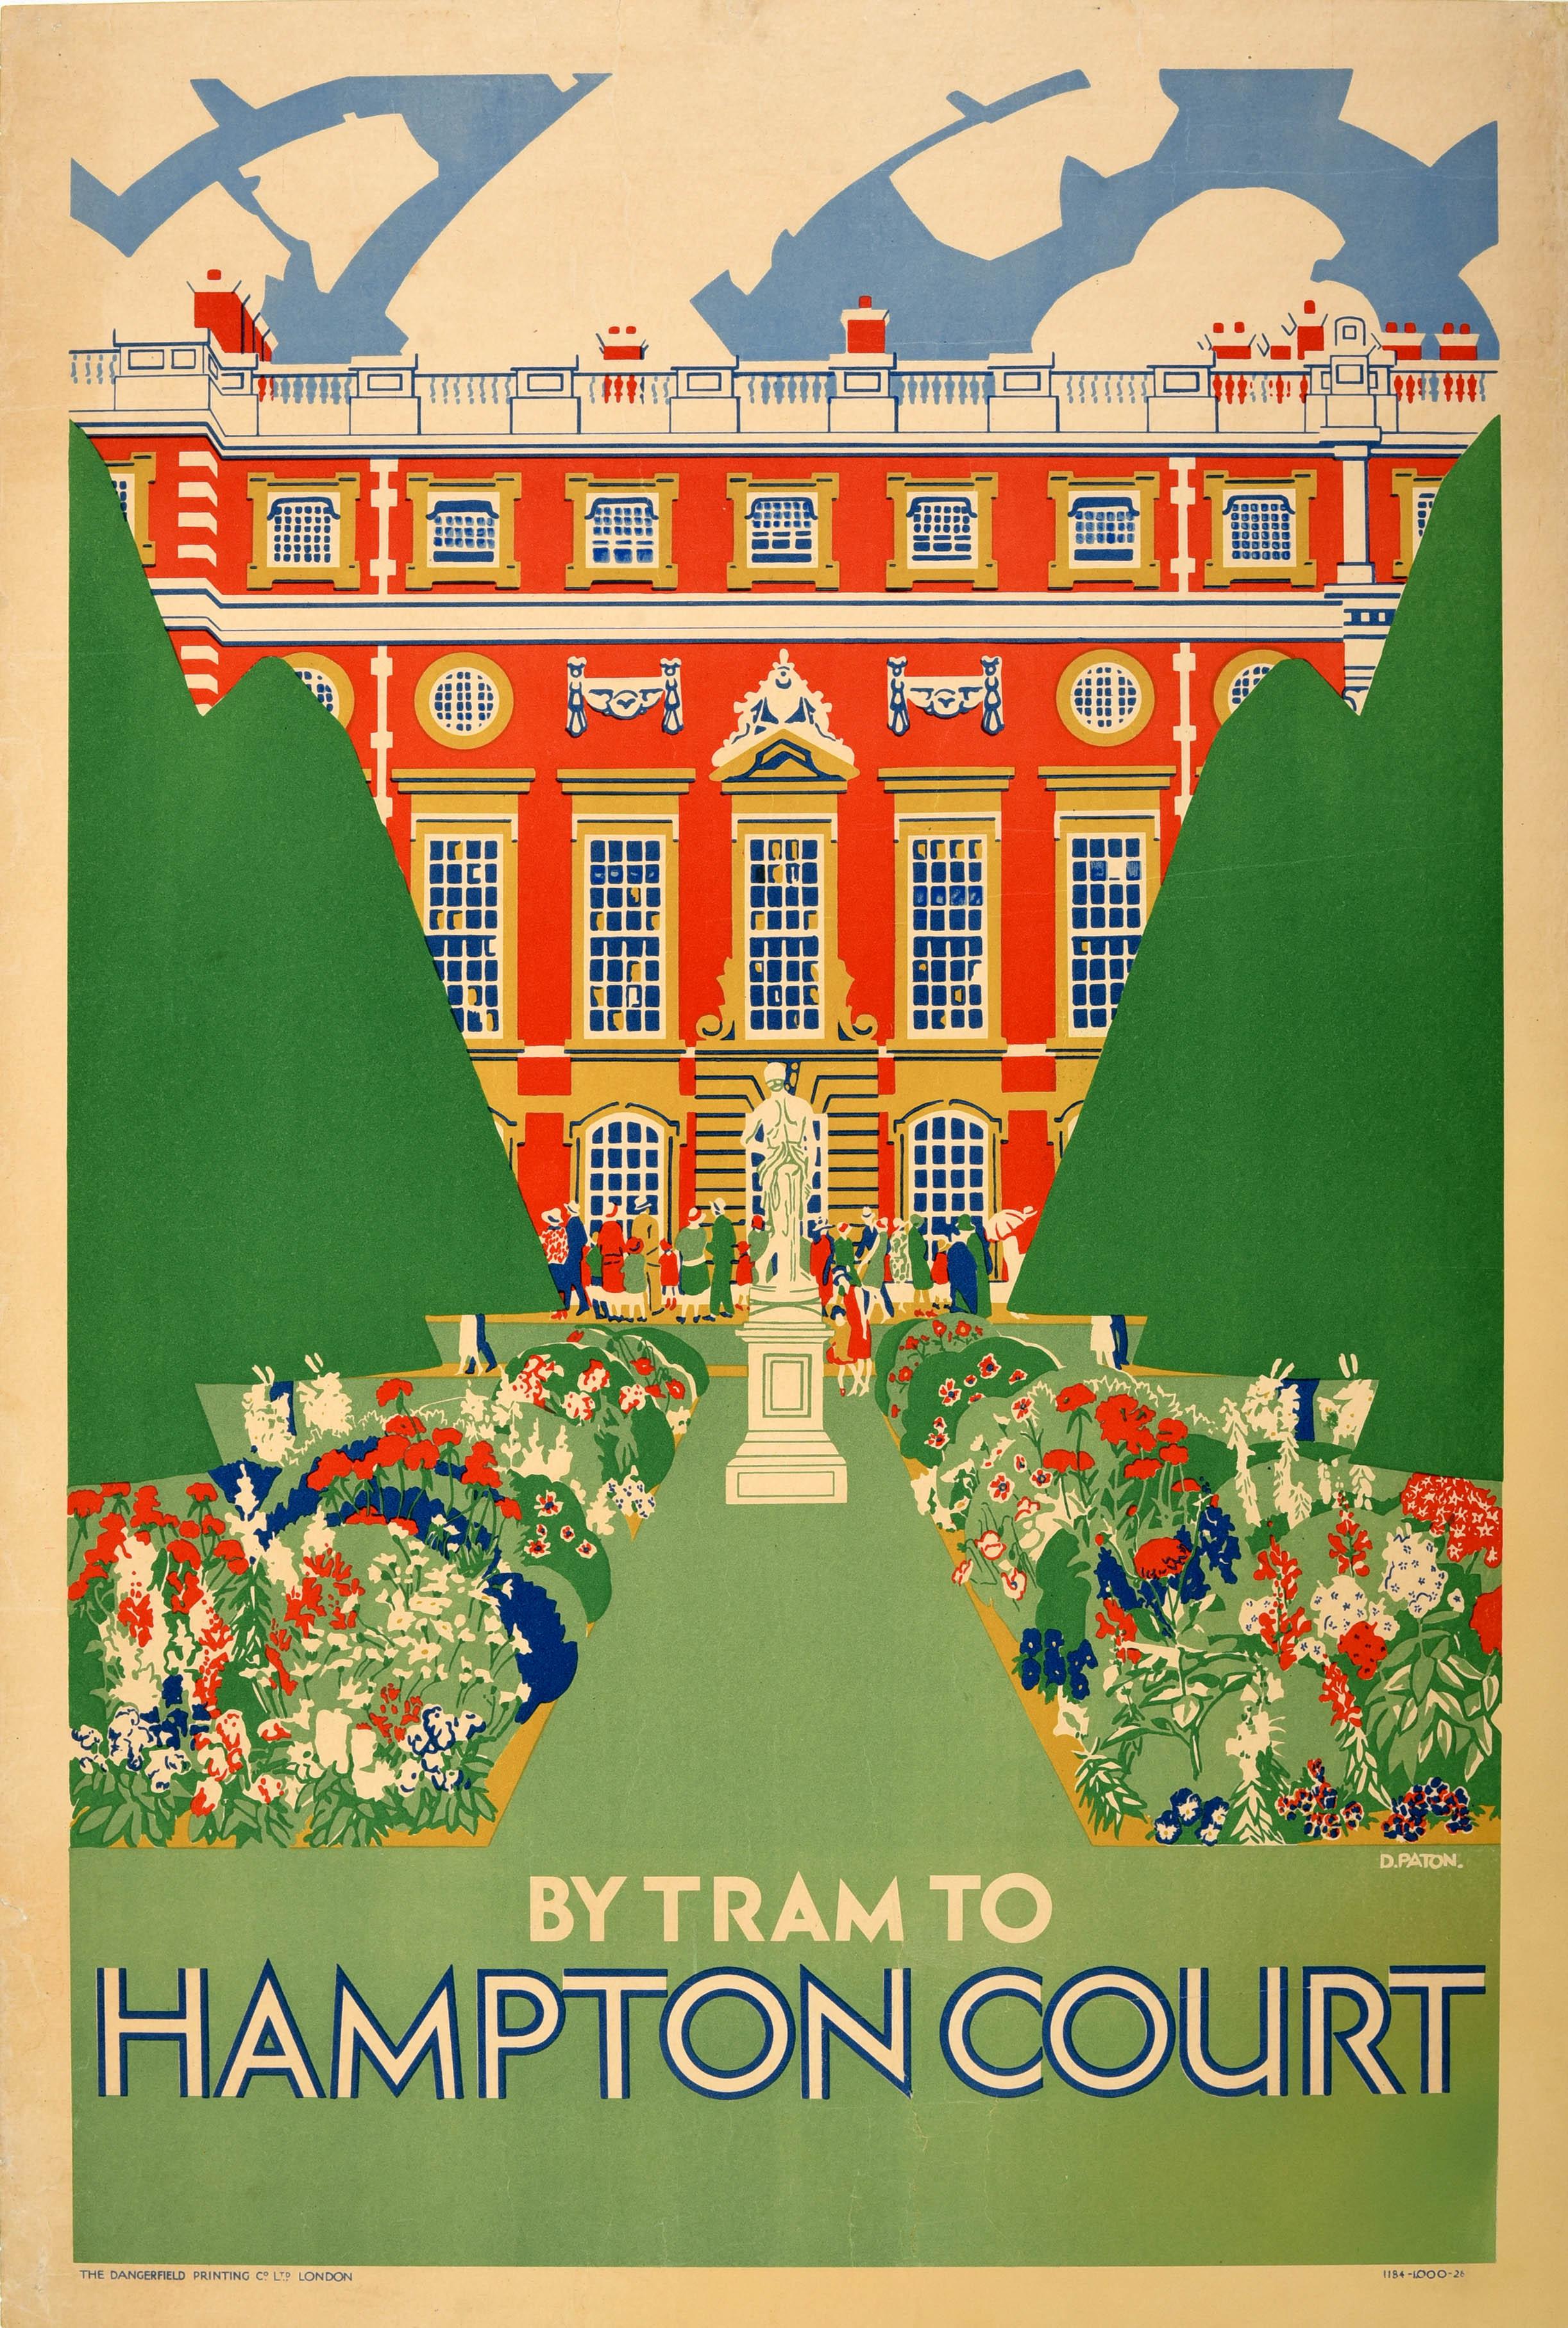 Dorothy Paton Print - Original Vintage London Transport Poster By Tram to Hampton Court Royal Palace